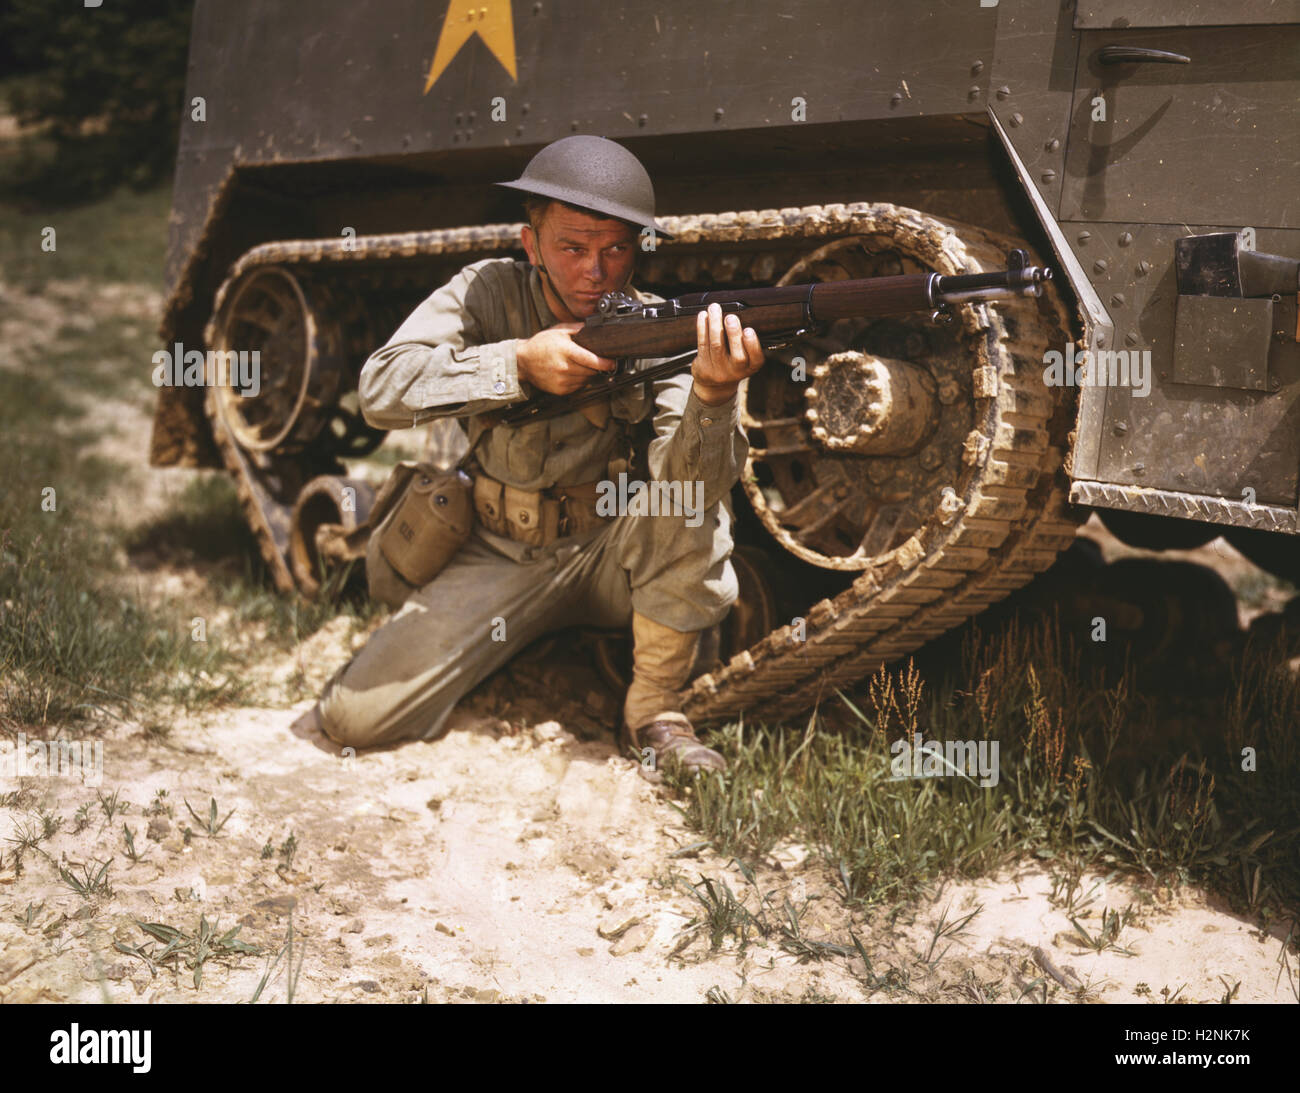 Jeune soldat visant Garland Carabine près de Armored Tank, Fort Knox, Kentucky, USA, Alfred T. Palmer pour l'Office of War Information, Juin 1942 Banque D'Images